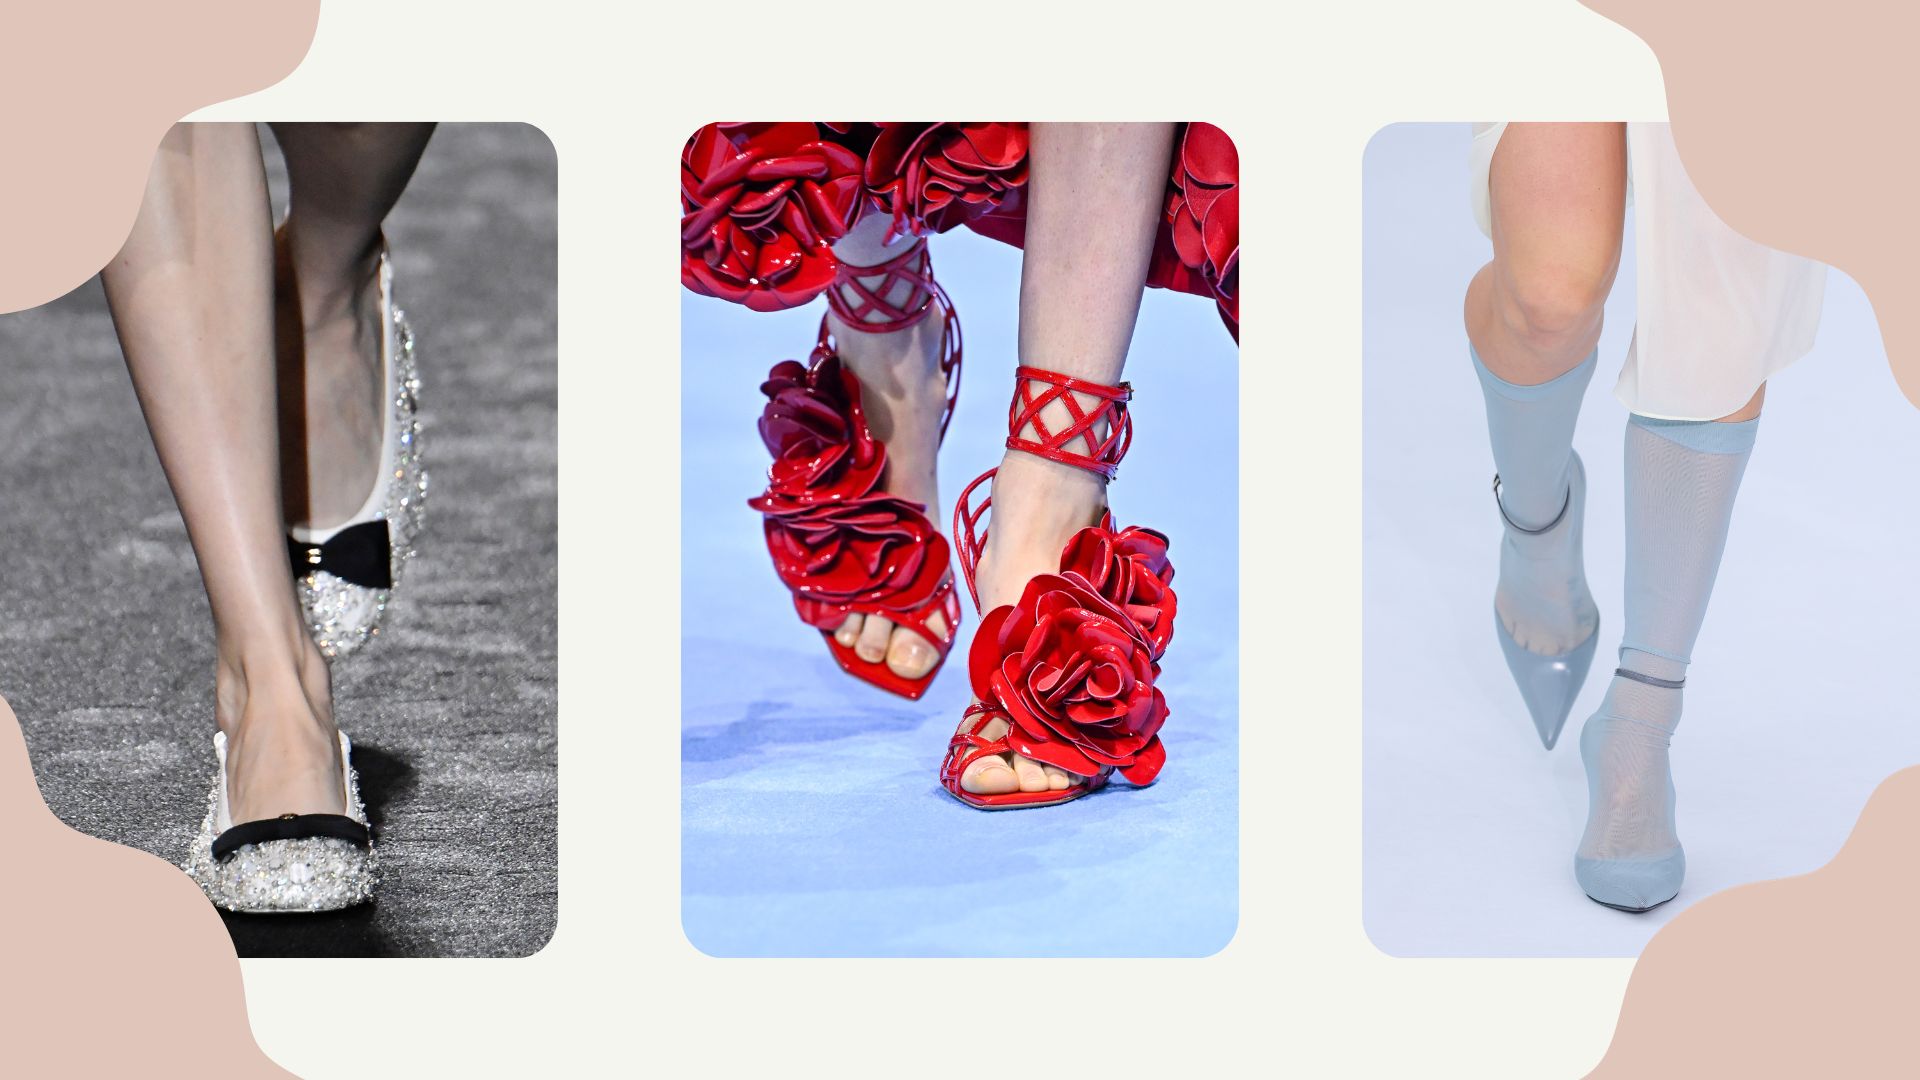 Sandals for Women Flat,Women's 2020 Bow Knot Comfy Platform Sandal Shoes  Summer Beach Travel Fashion Slipper Flip Flops